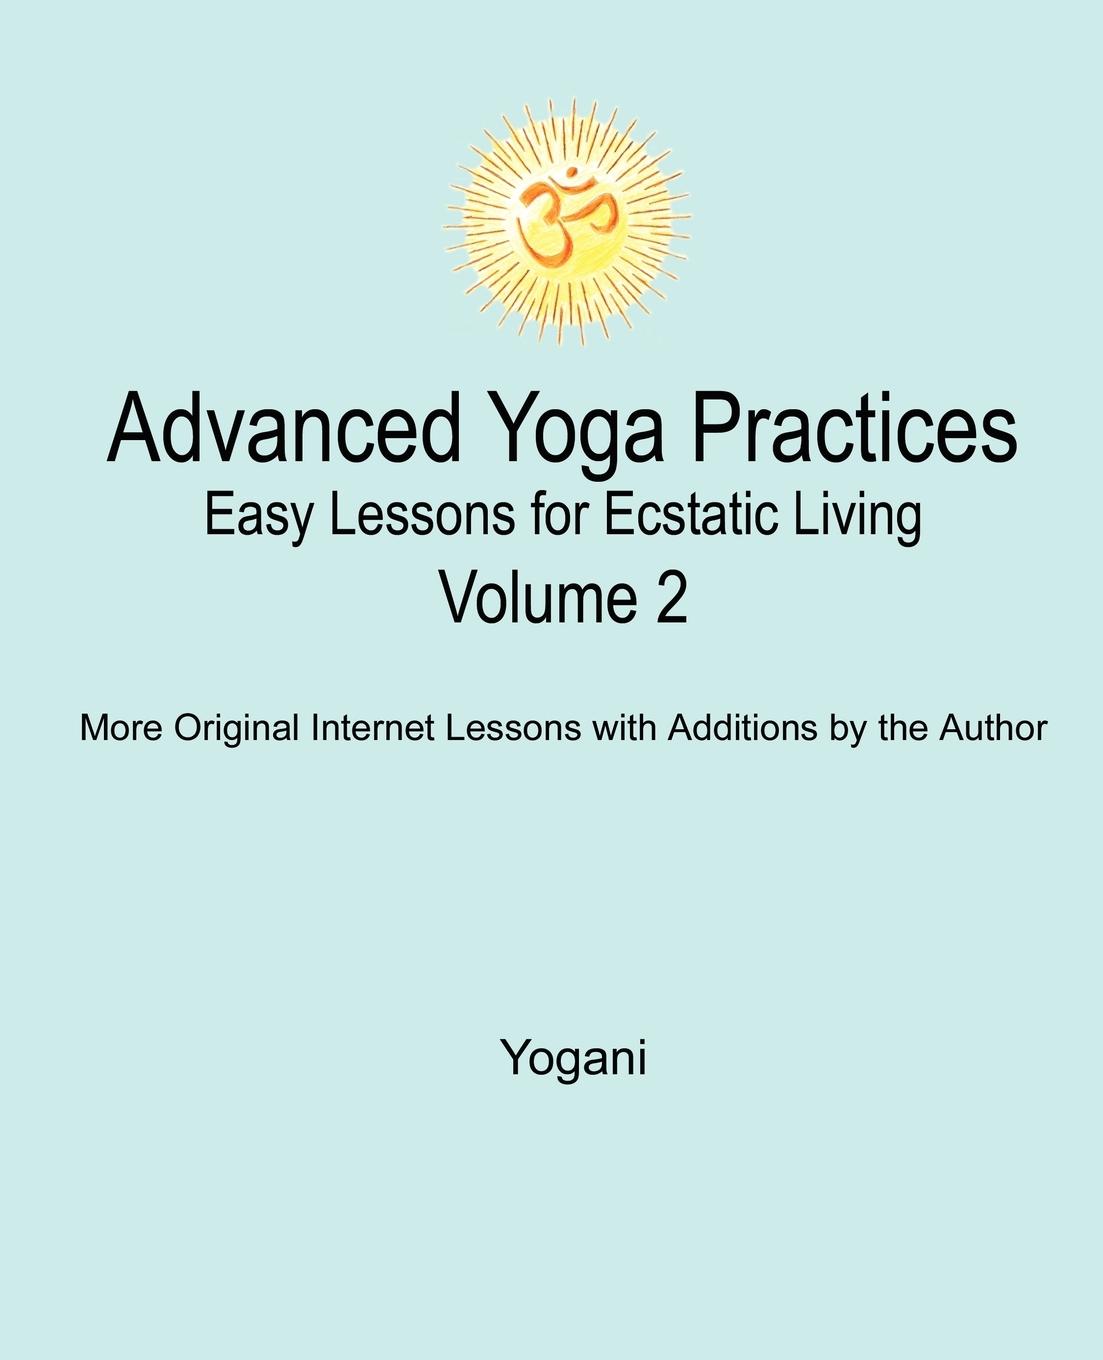 Advanced Yoga Practices - Easy Lessons for Ecstatic Living, Volume 2 - Yogani